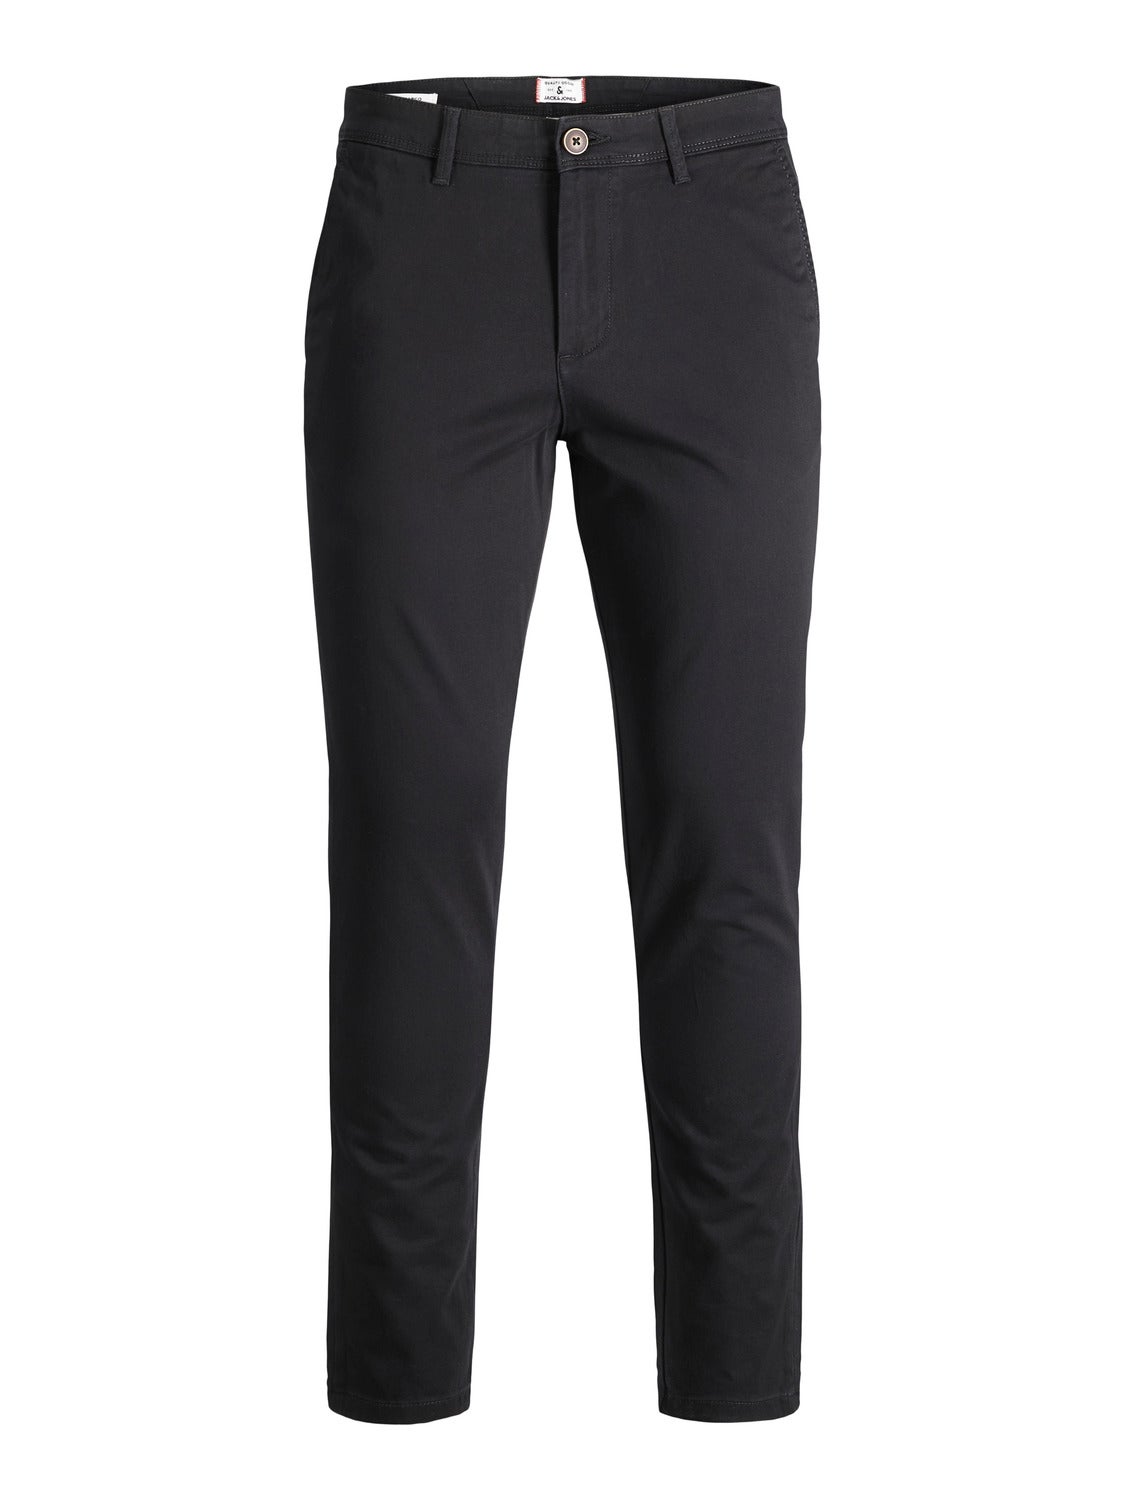 Dickies Mens Trousers W42 L29 Beige Original Fit Workwear Chinos Khaki |  eBay